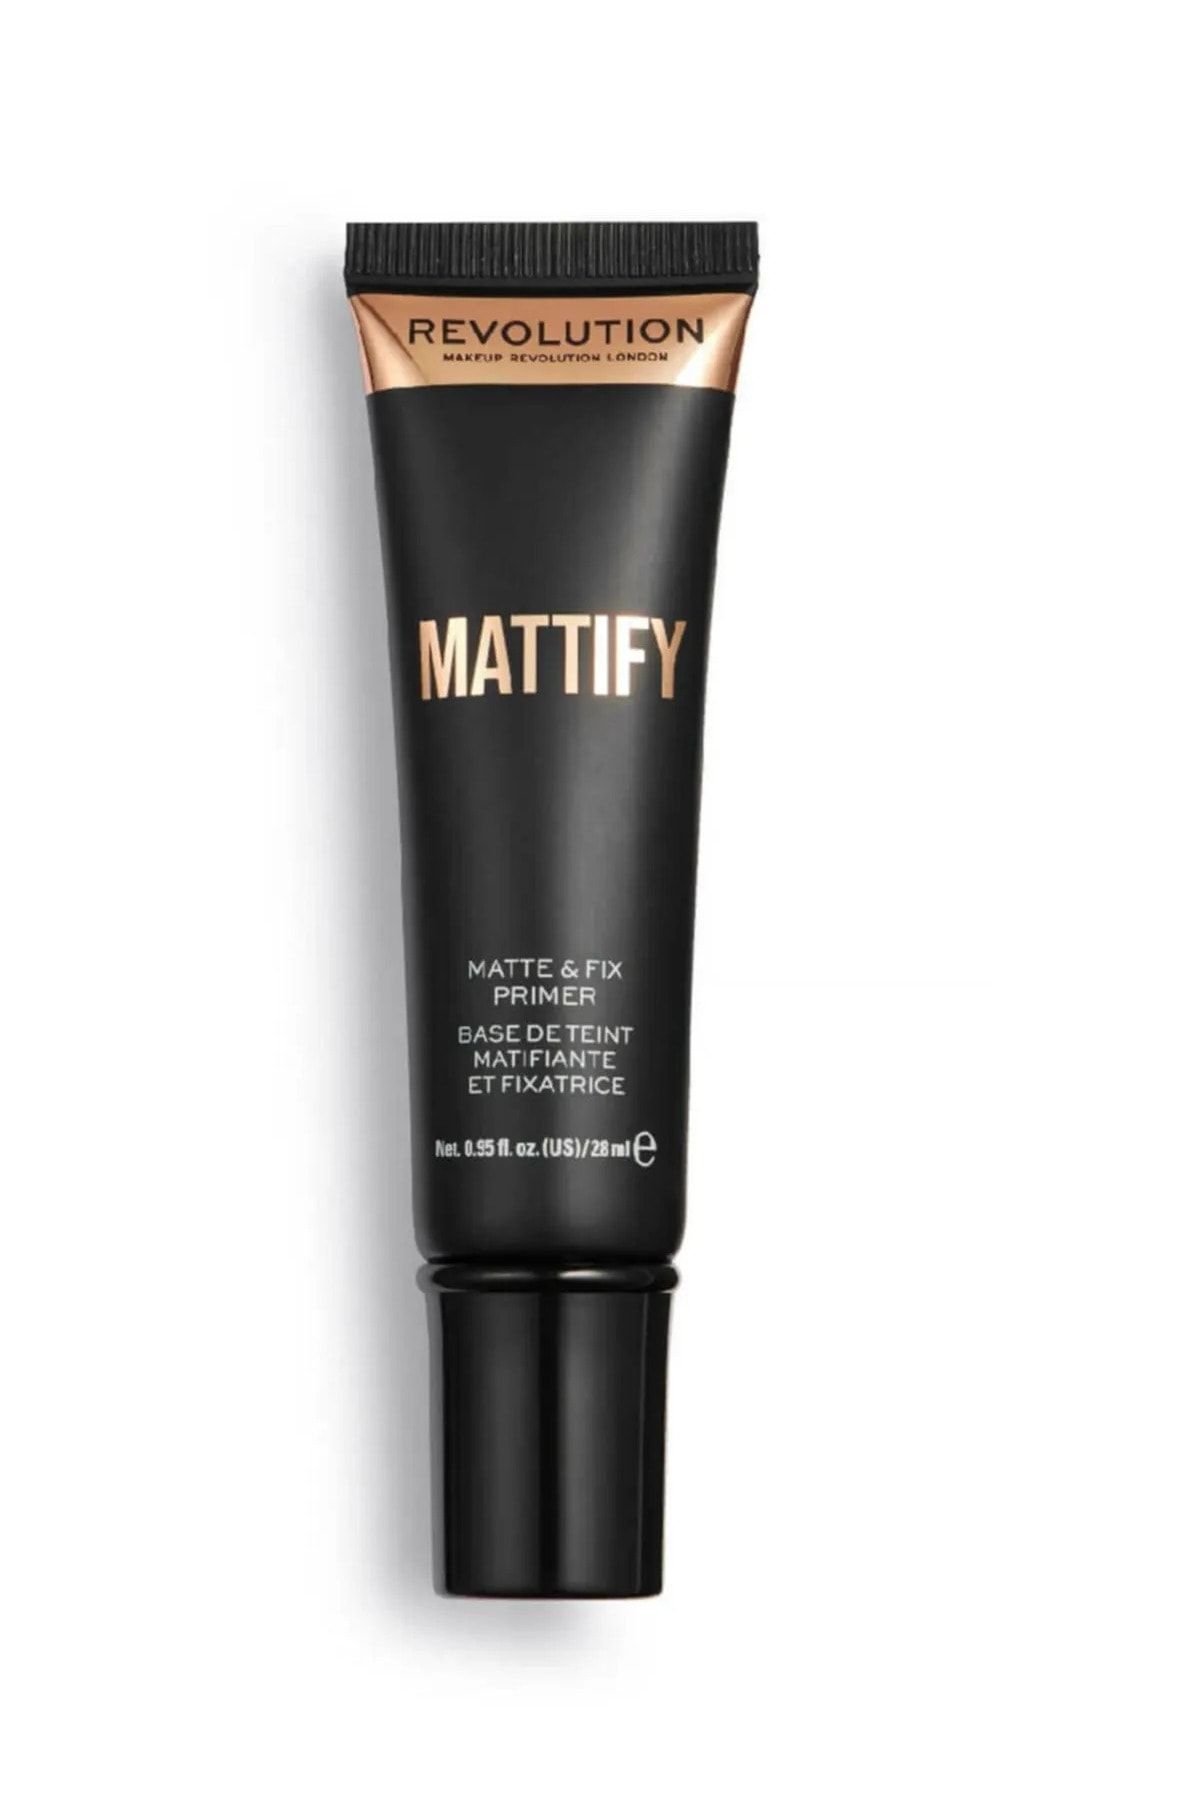 Revolution Matte & Fix Primer Matlaştırıcı E Vitaminli Şeffaf Jel Makyaj Bazı 28ml